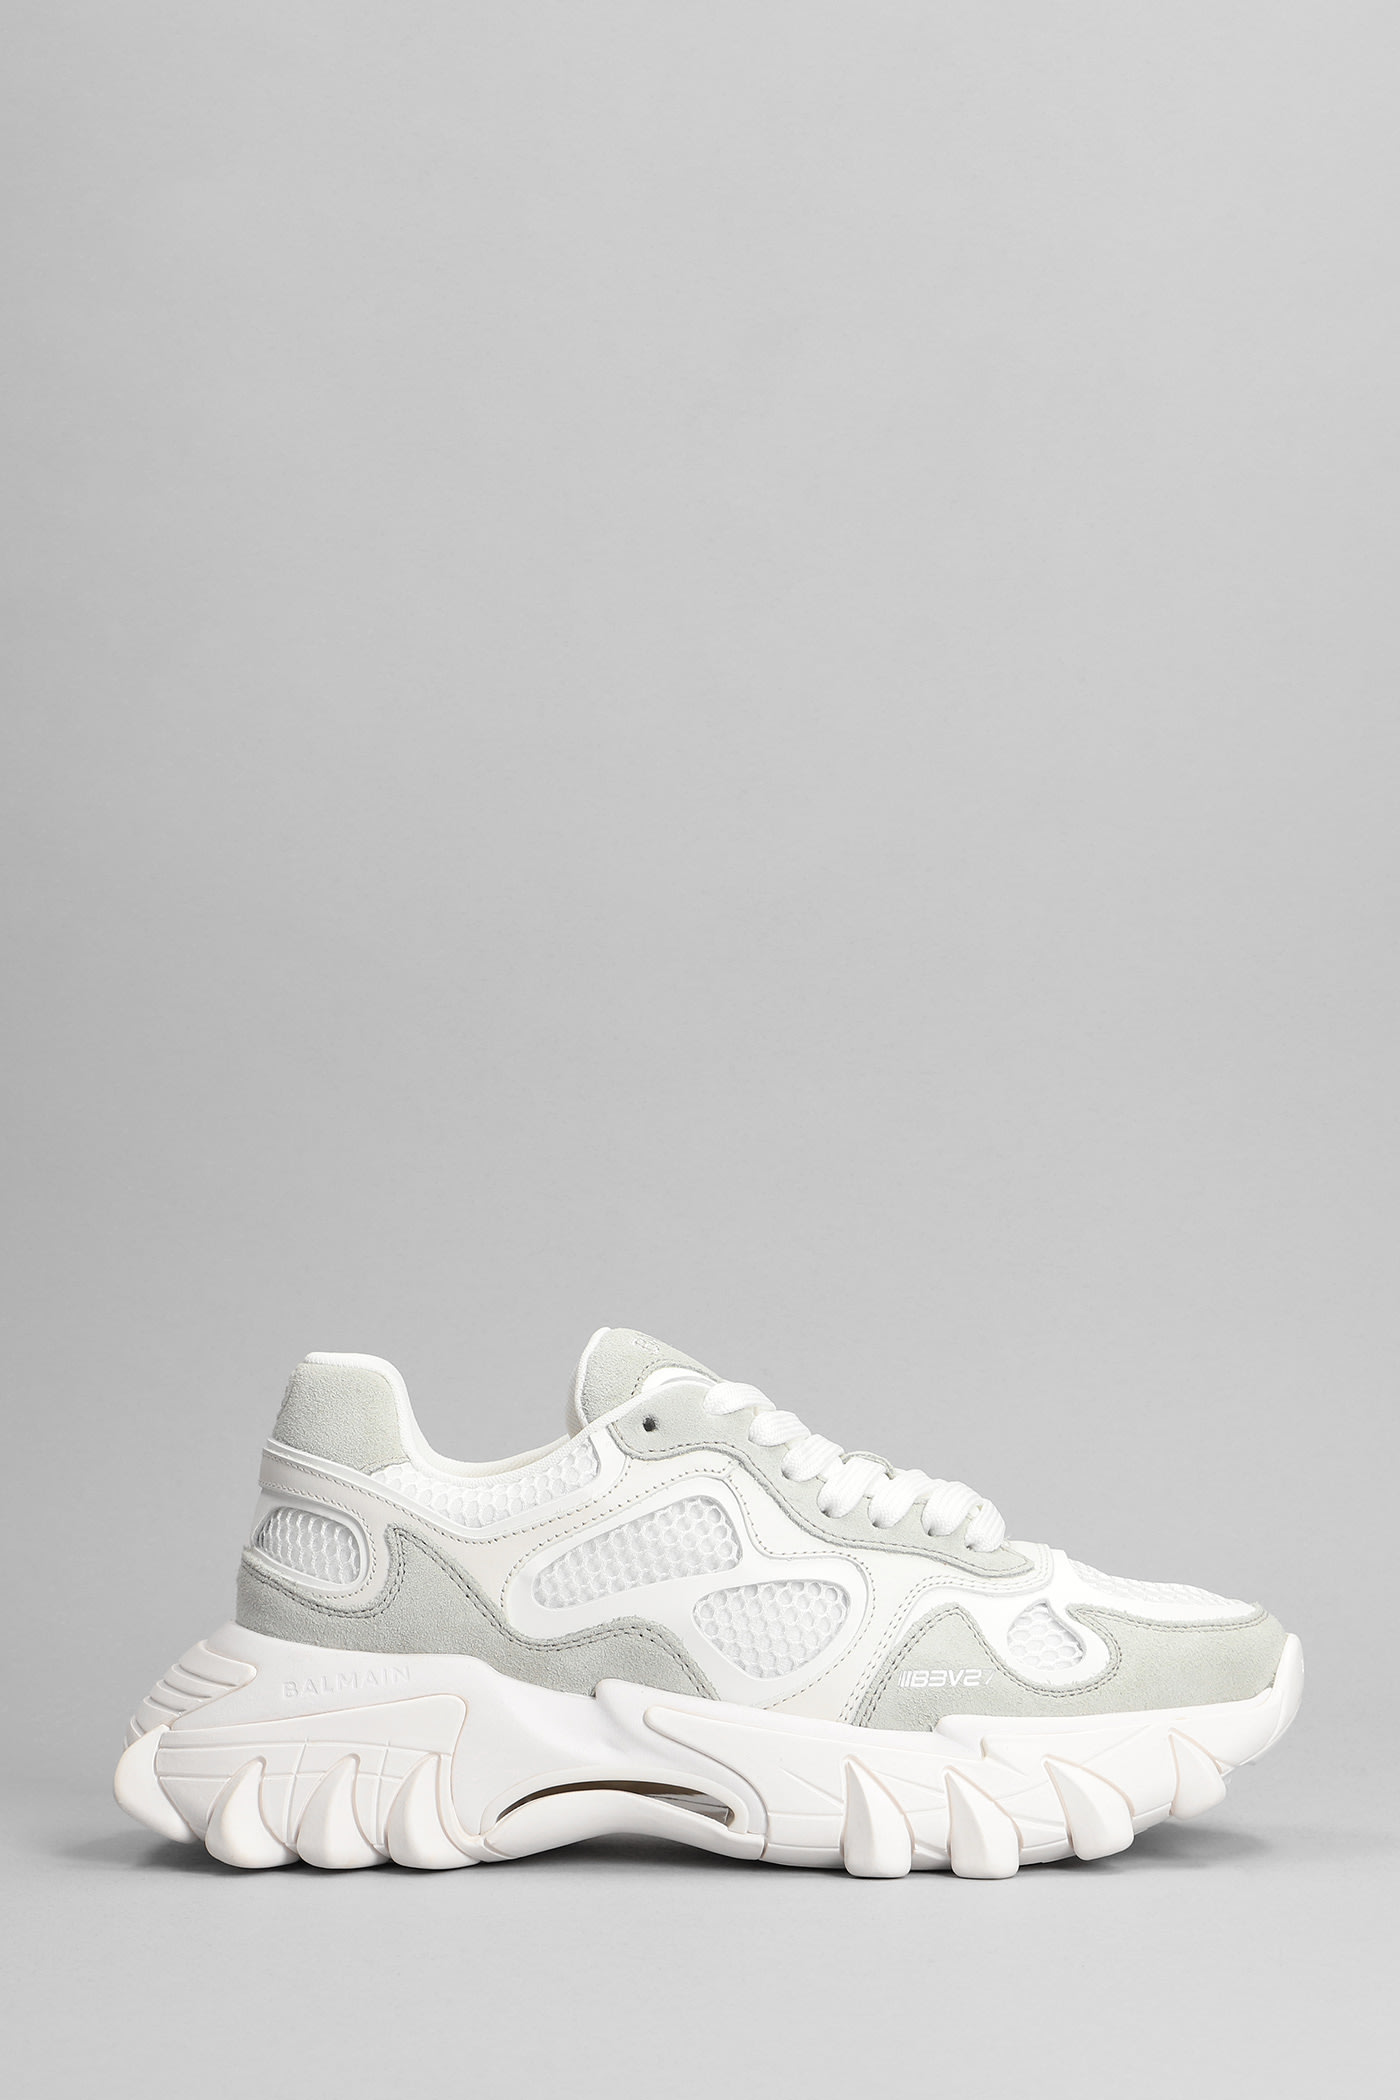 Balmain Sneakers In White Suede